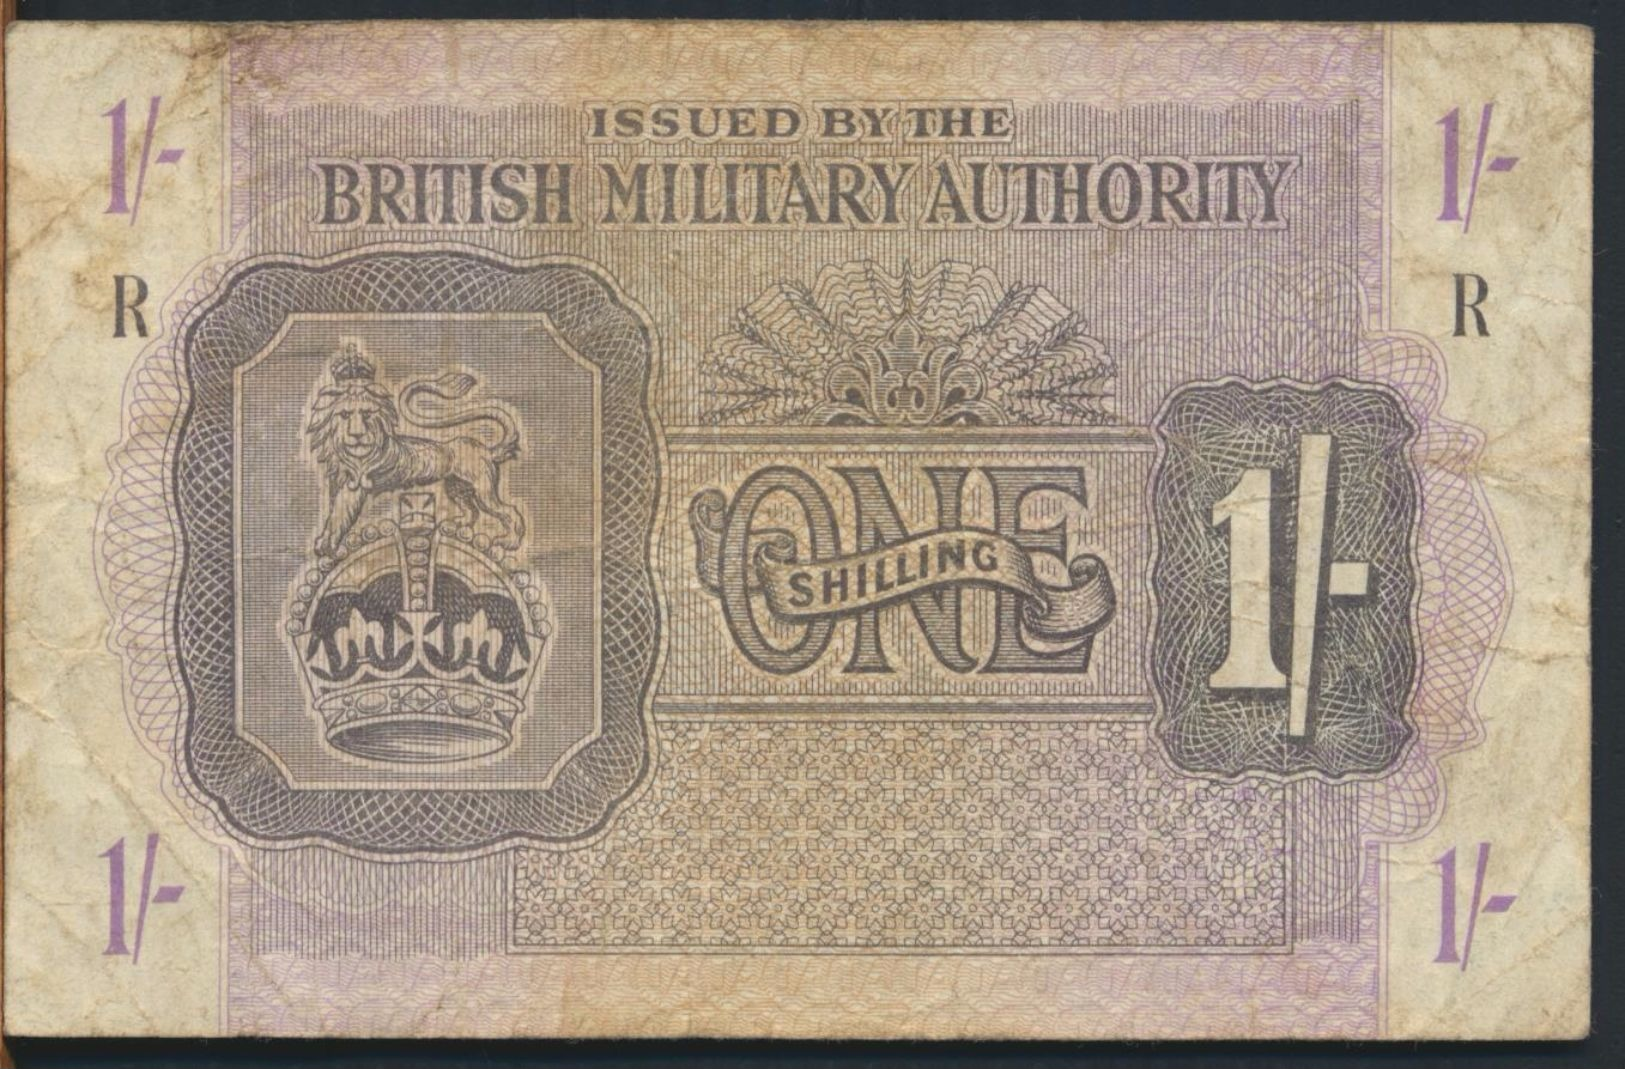 °°° UK - BRITISH MILITARY AUTHORITY 1 POUND R °°° - Britse Militaire Autoriteit